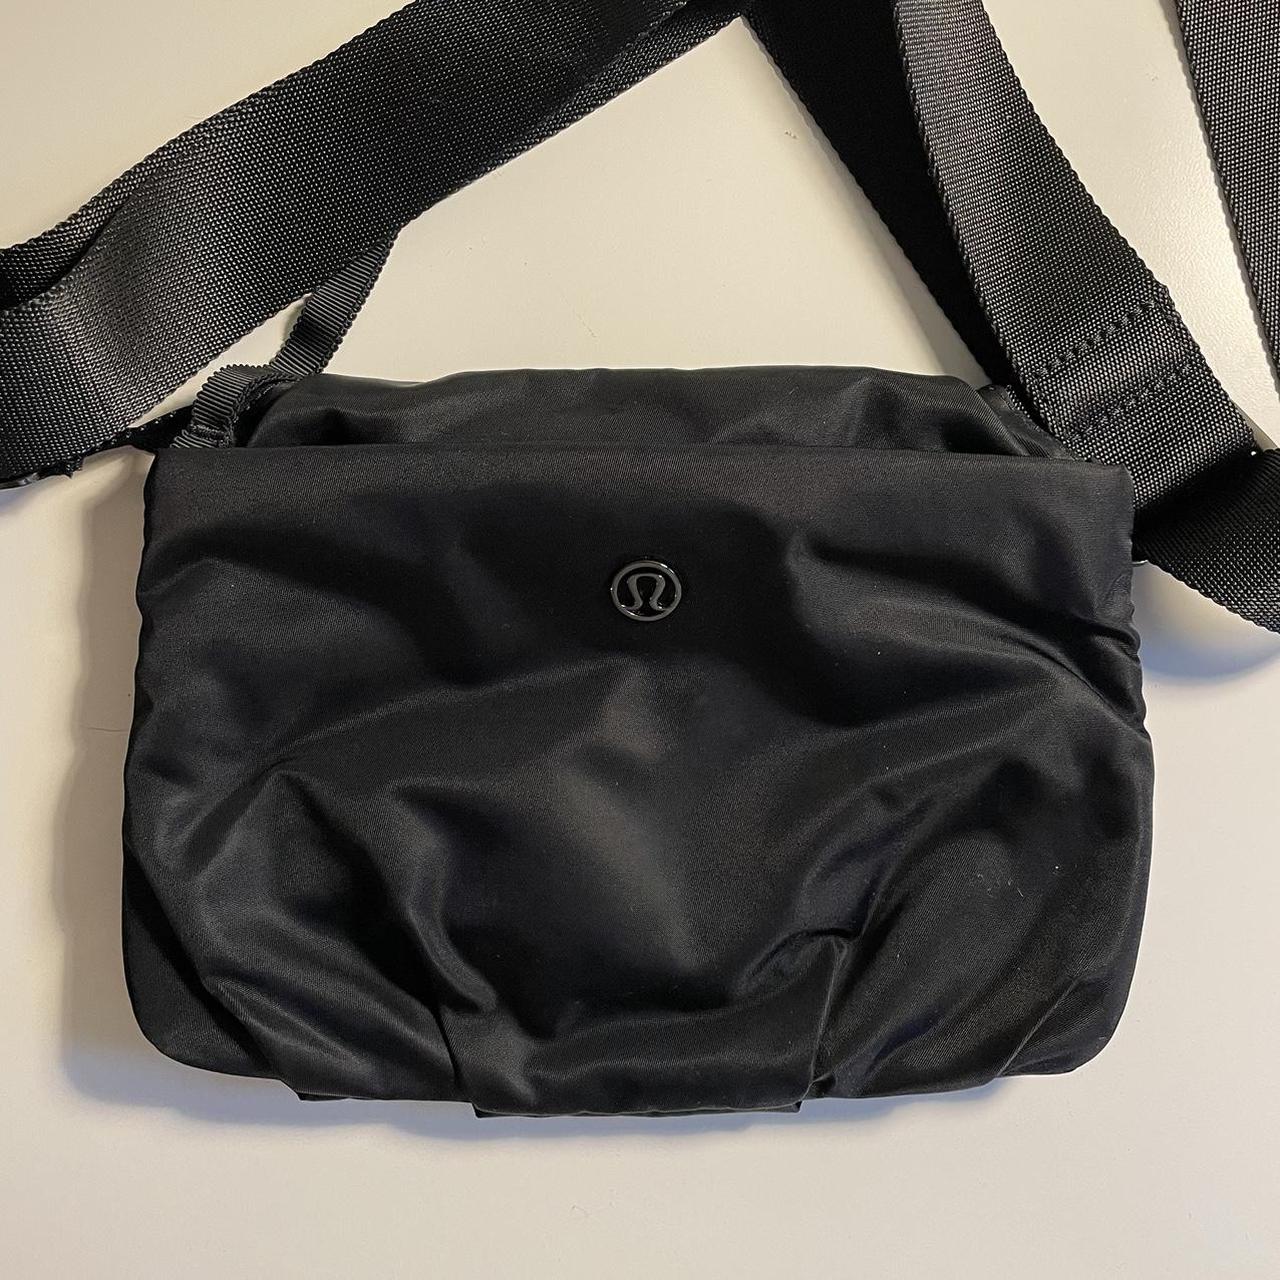 Lululemon Black Yoga Bag